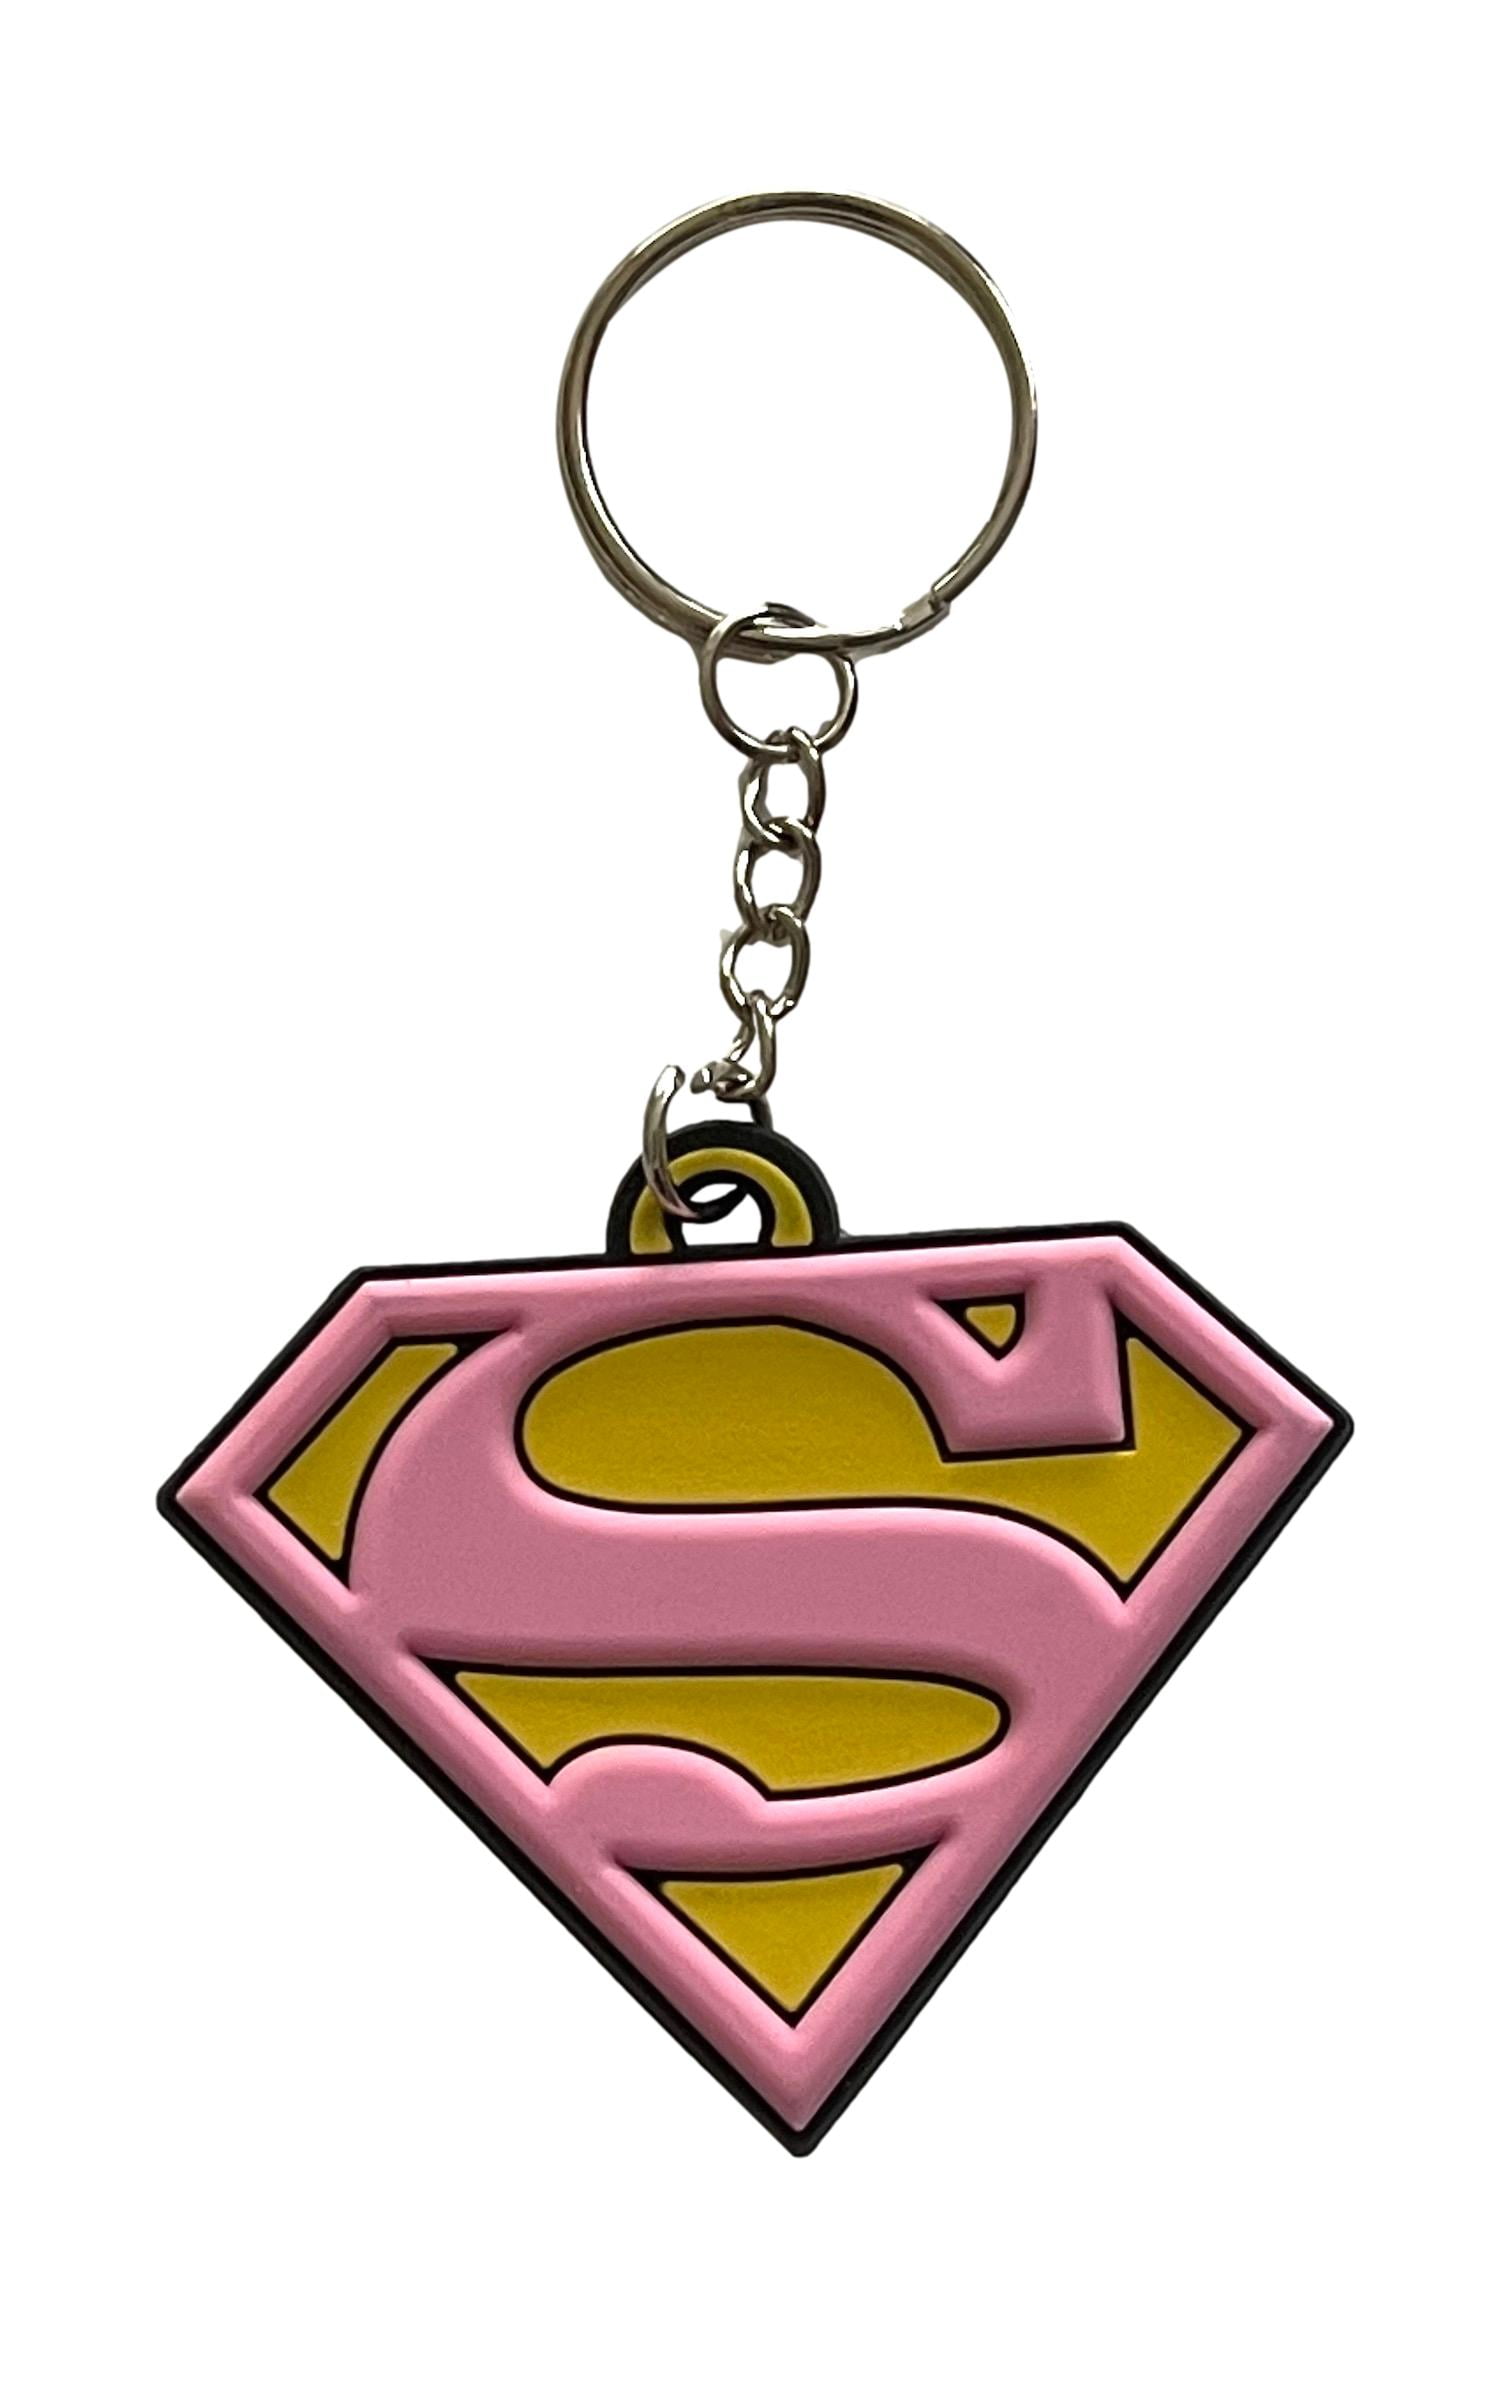 Superman Logo Bendable Keychain